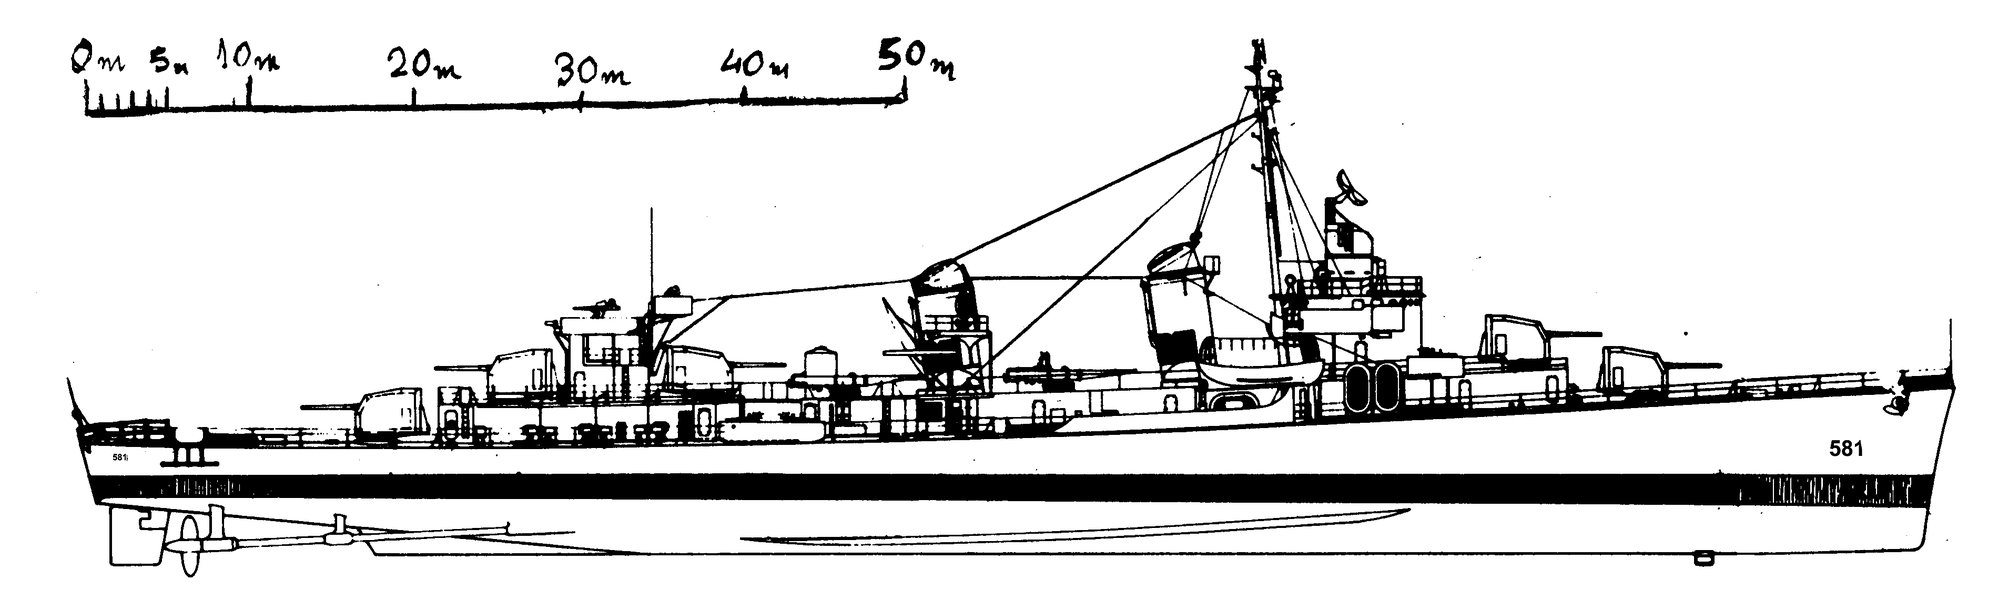 USS+Charrette+%28DD-581%29+profile.jpg